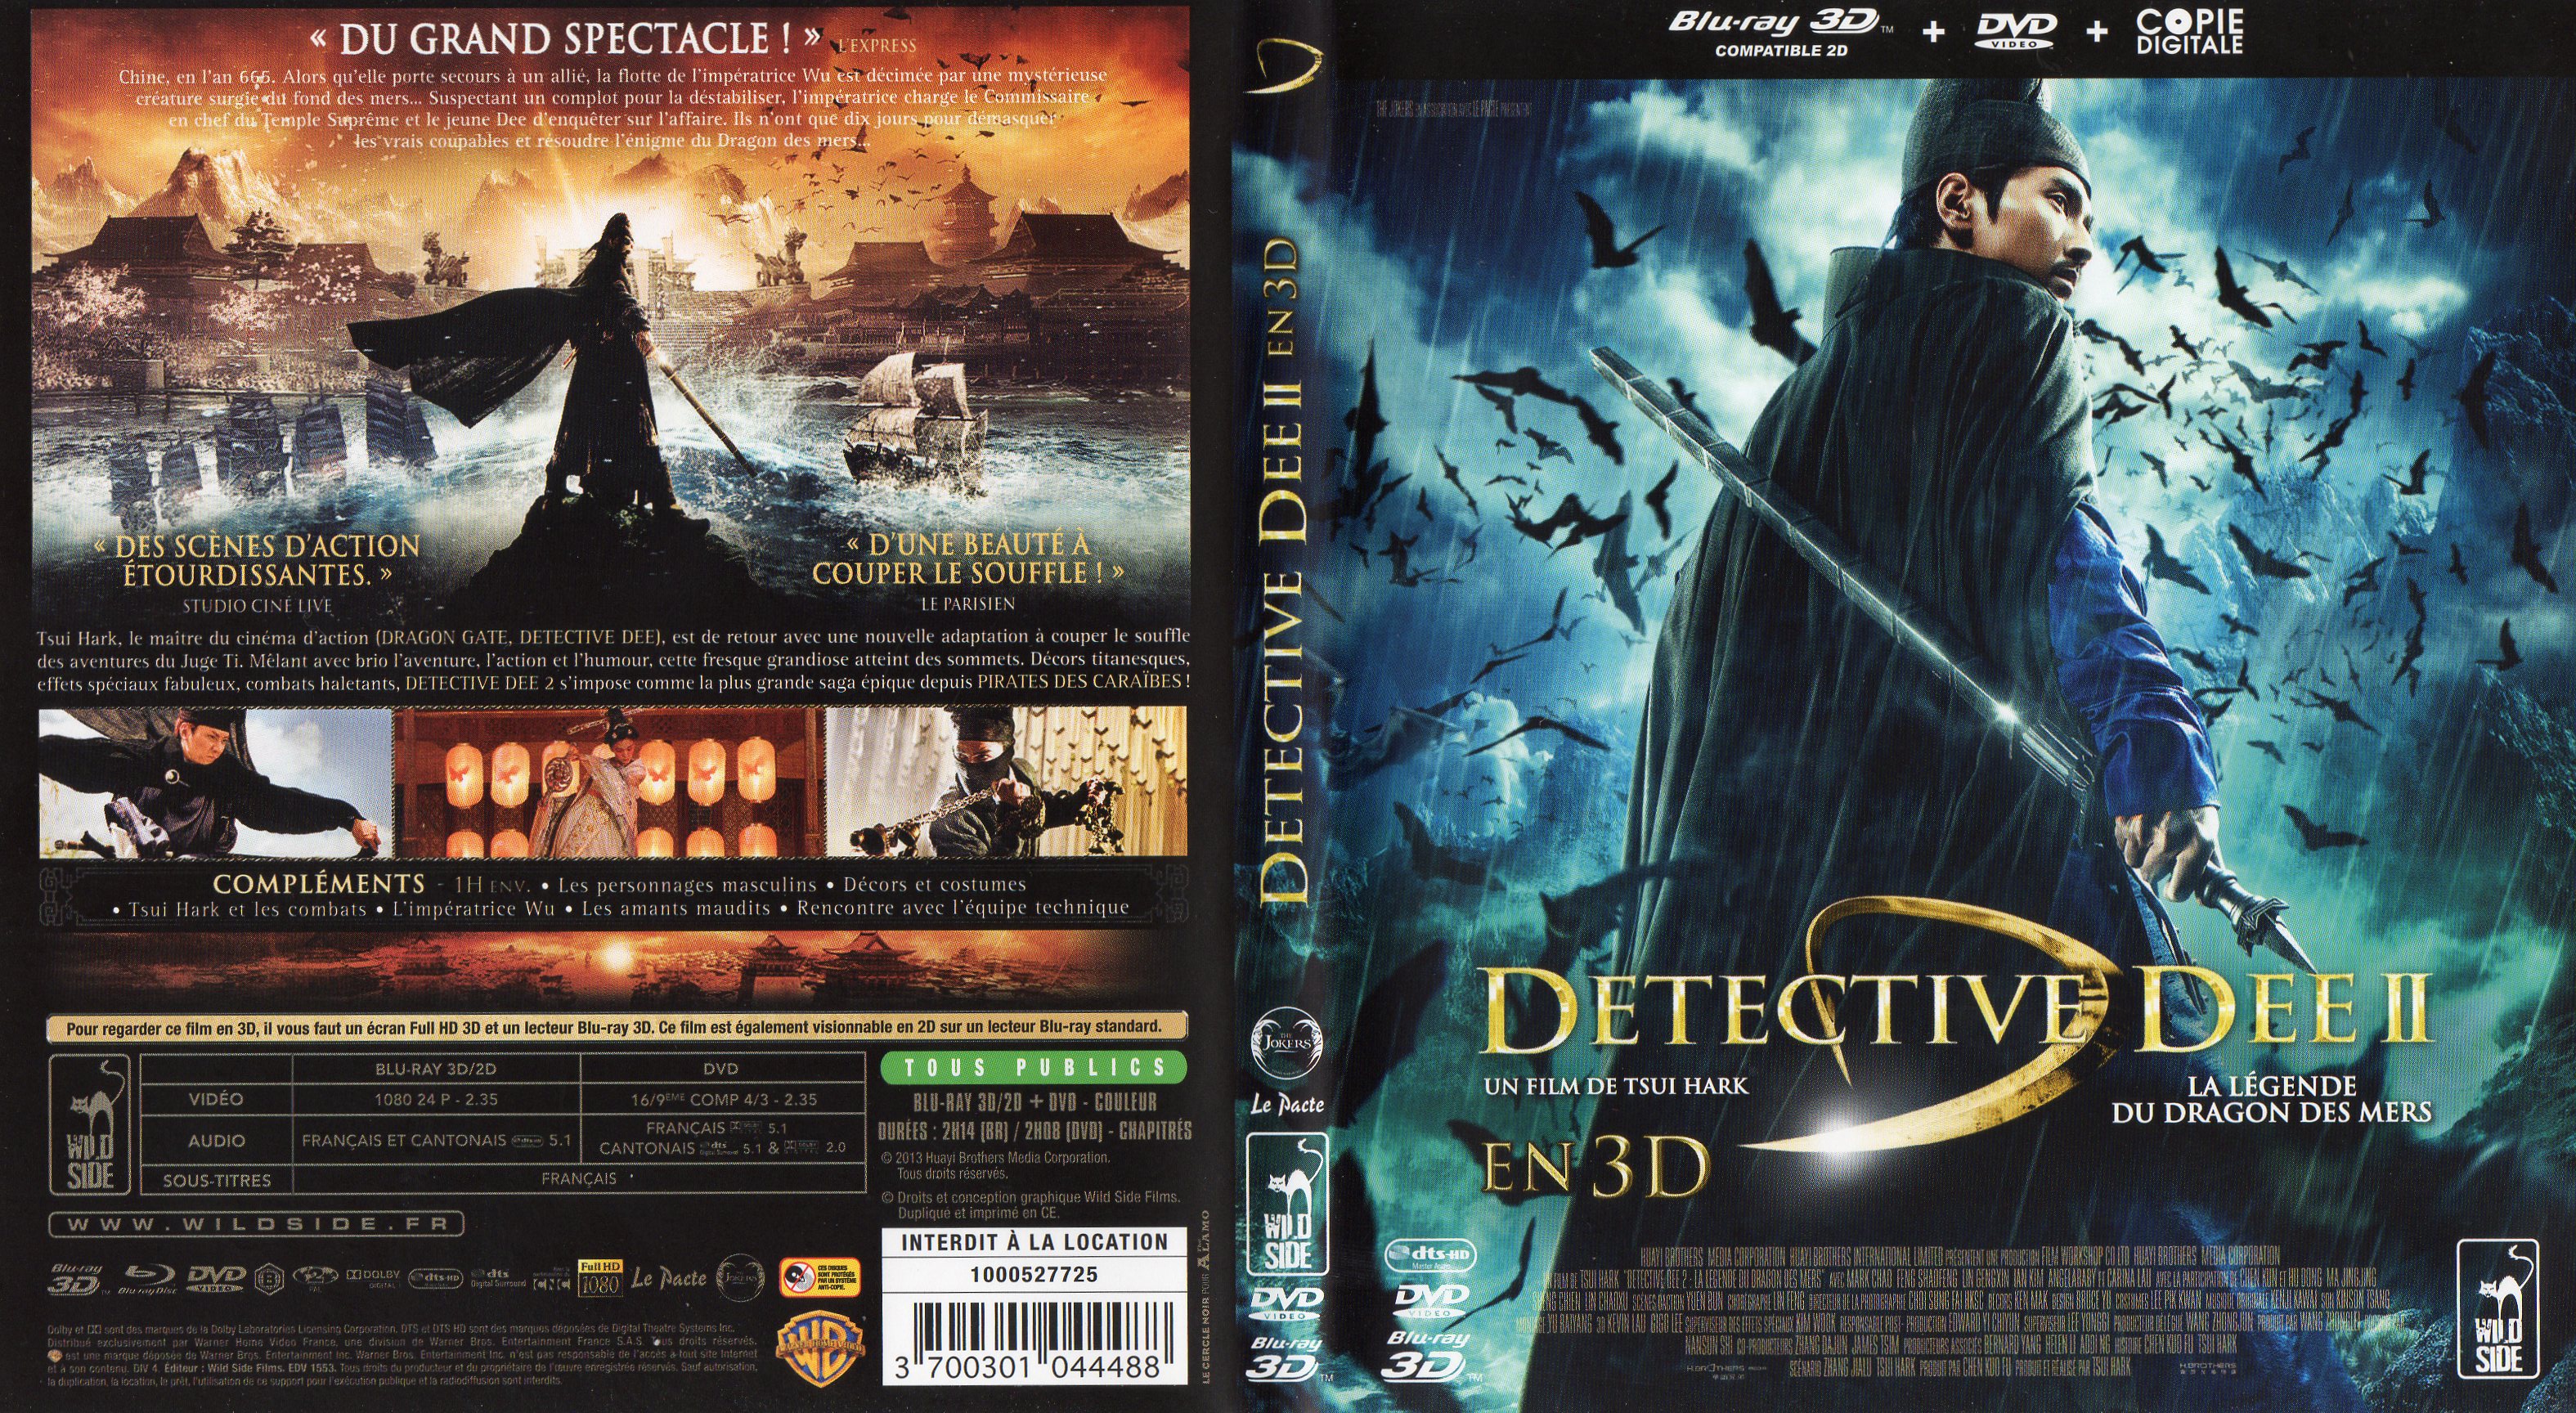 Jaquette DVD Dtective Dee II : La Lgende du Dragon des Mers (BLU-RAY)